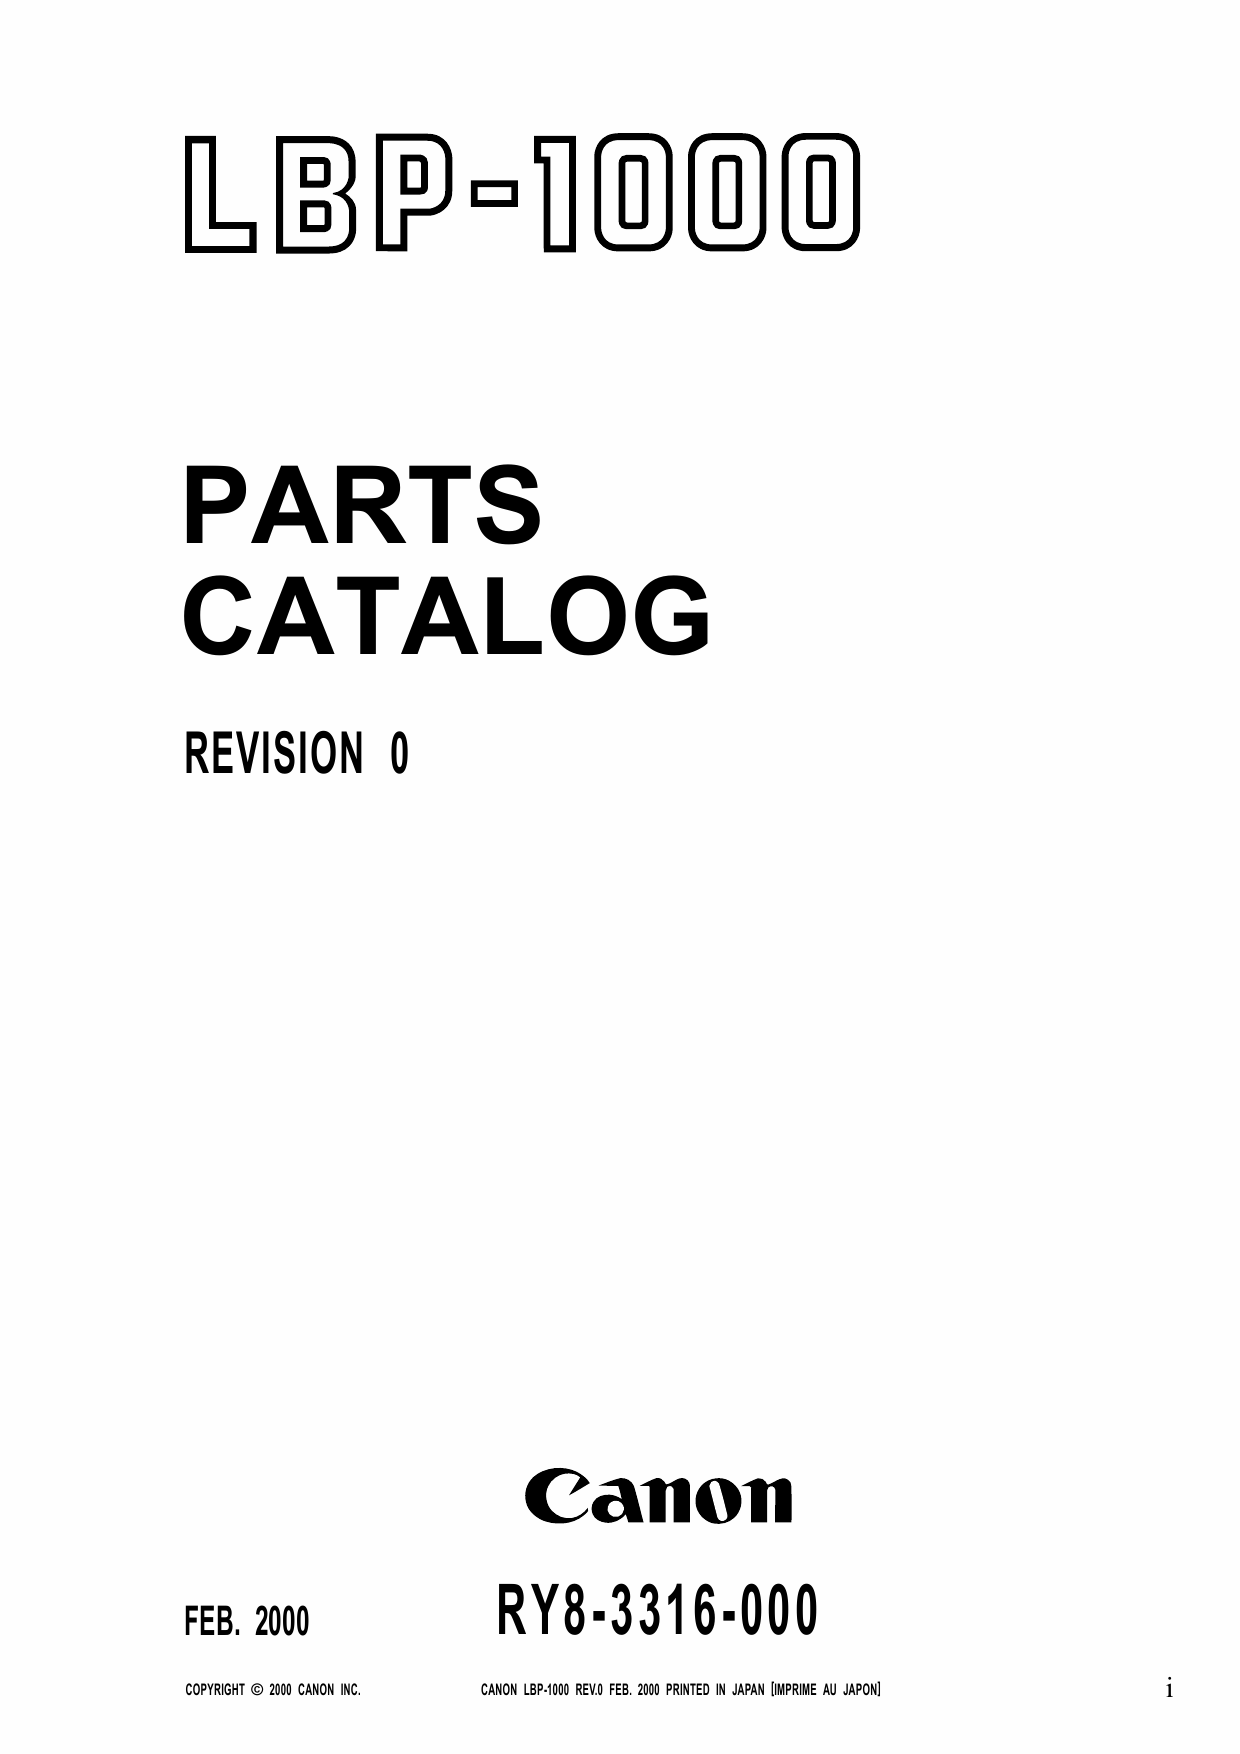 Canon imageCLASS LBP-1000 Parts Catalog Manual-1